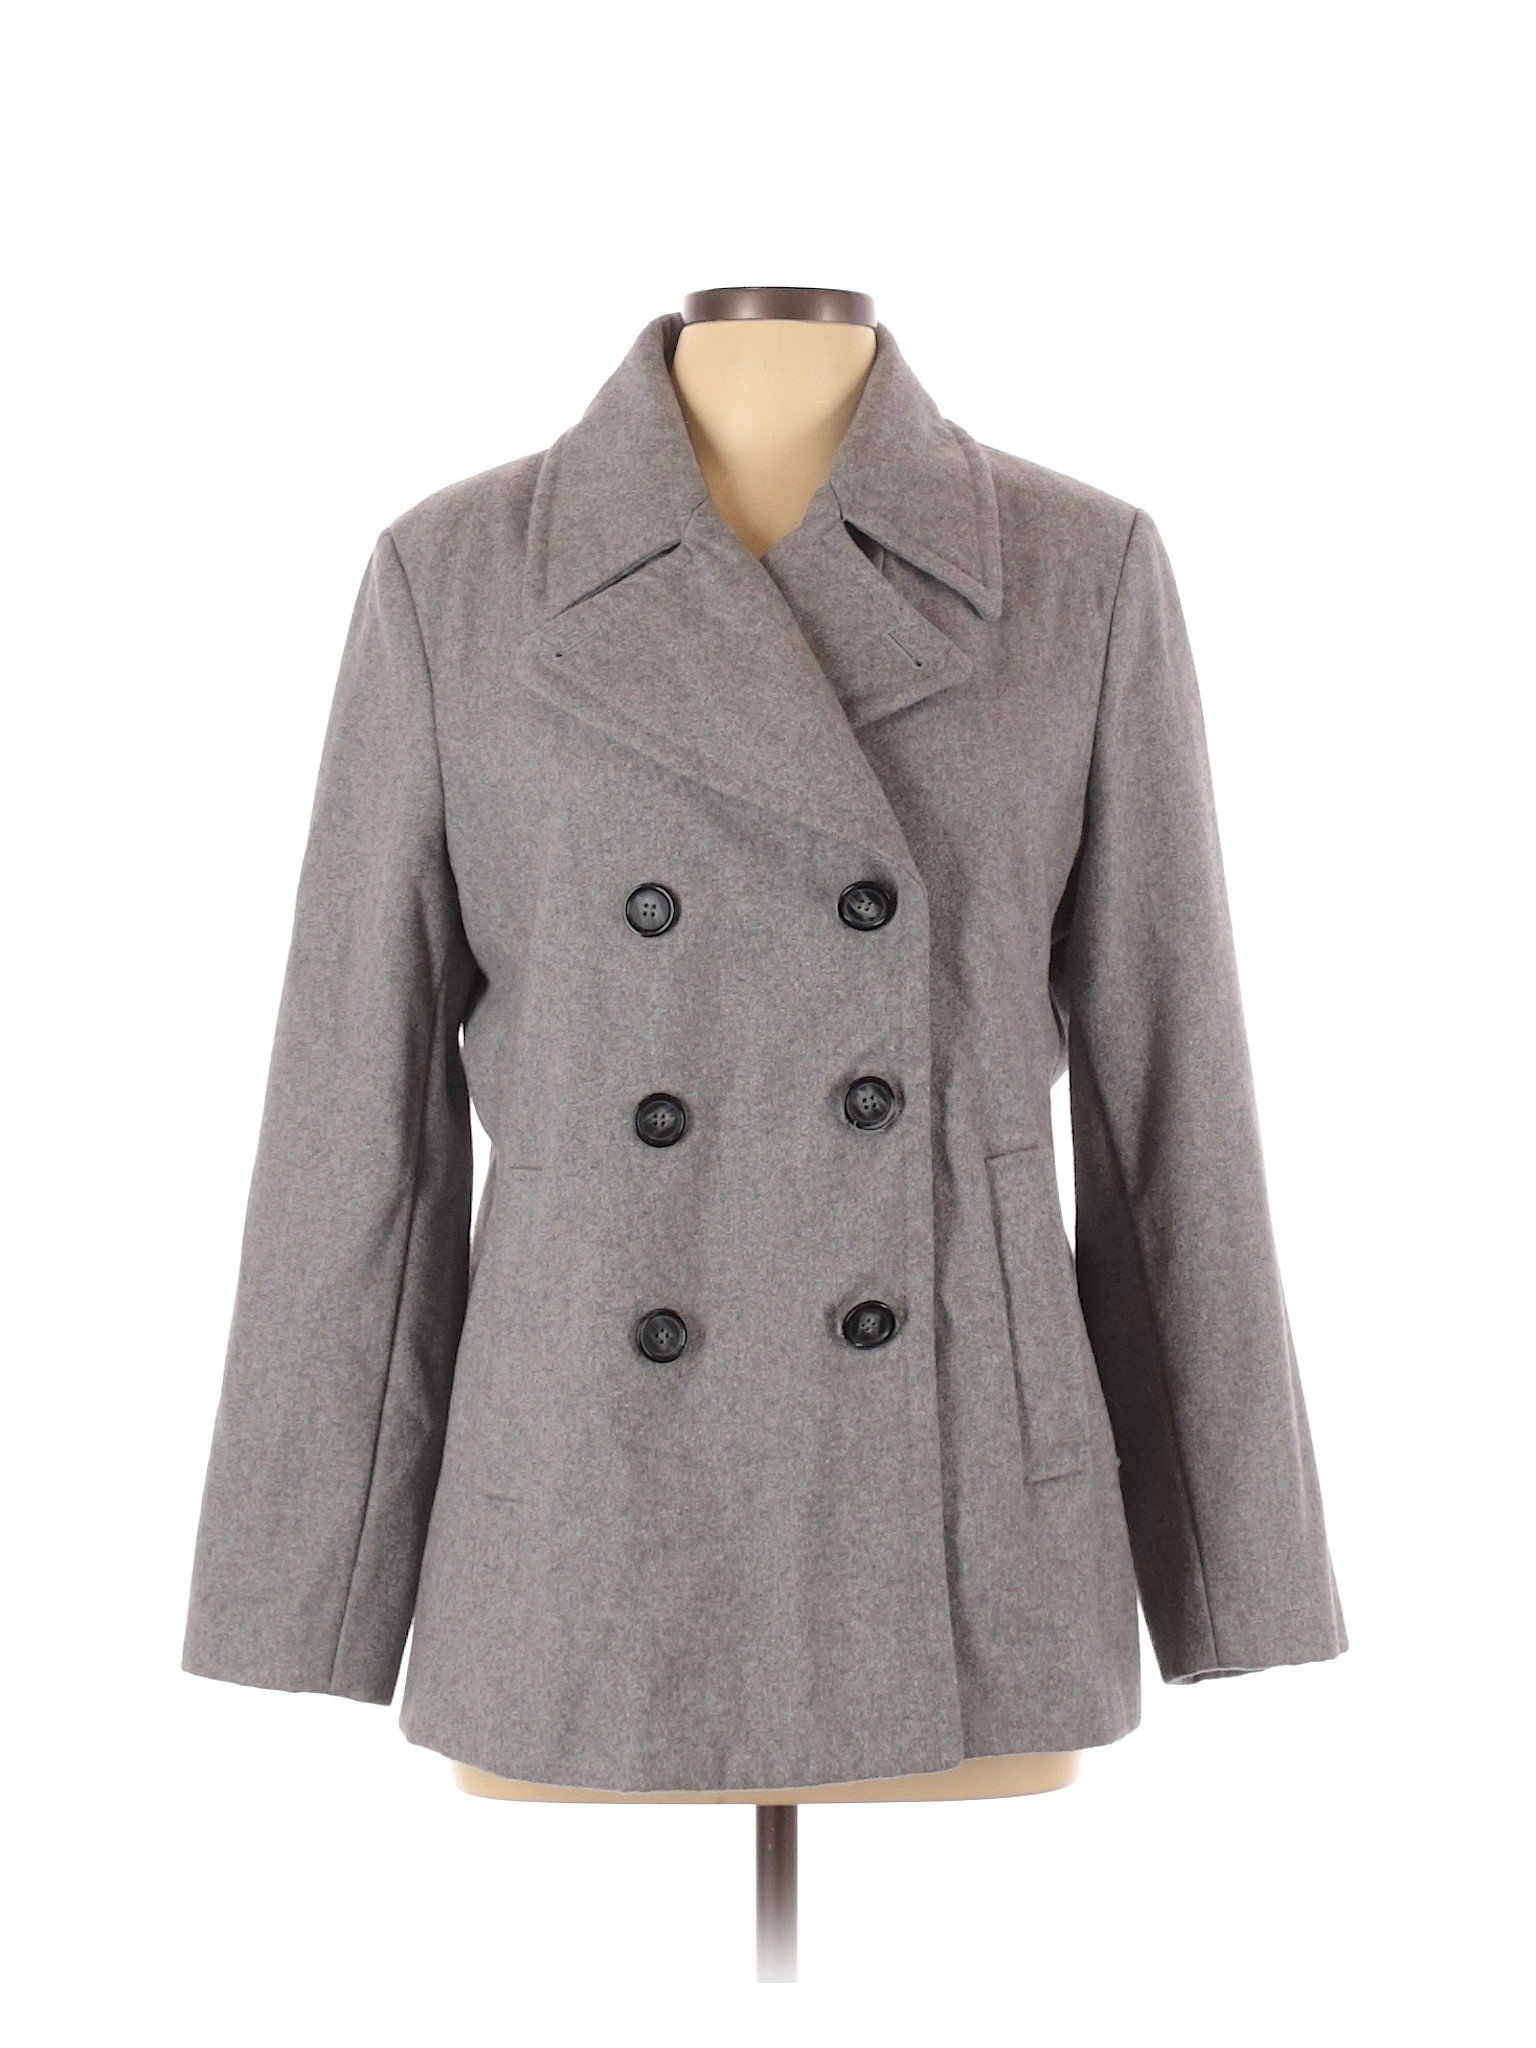 Old Navy Women Gray Coat L | eBay